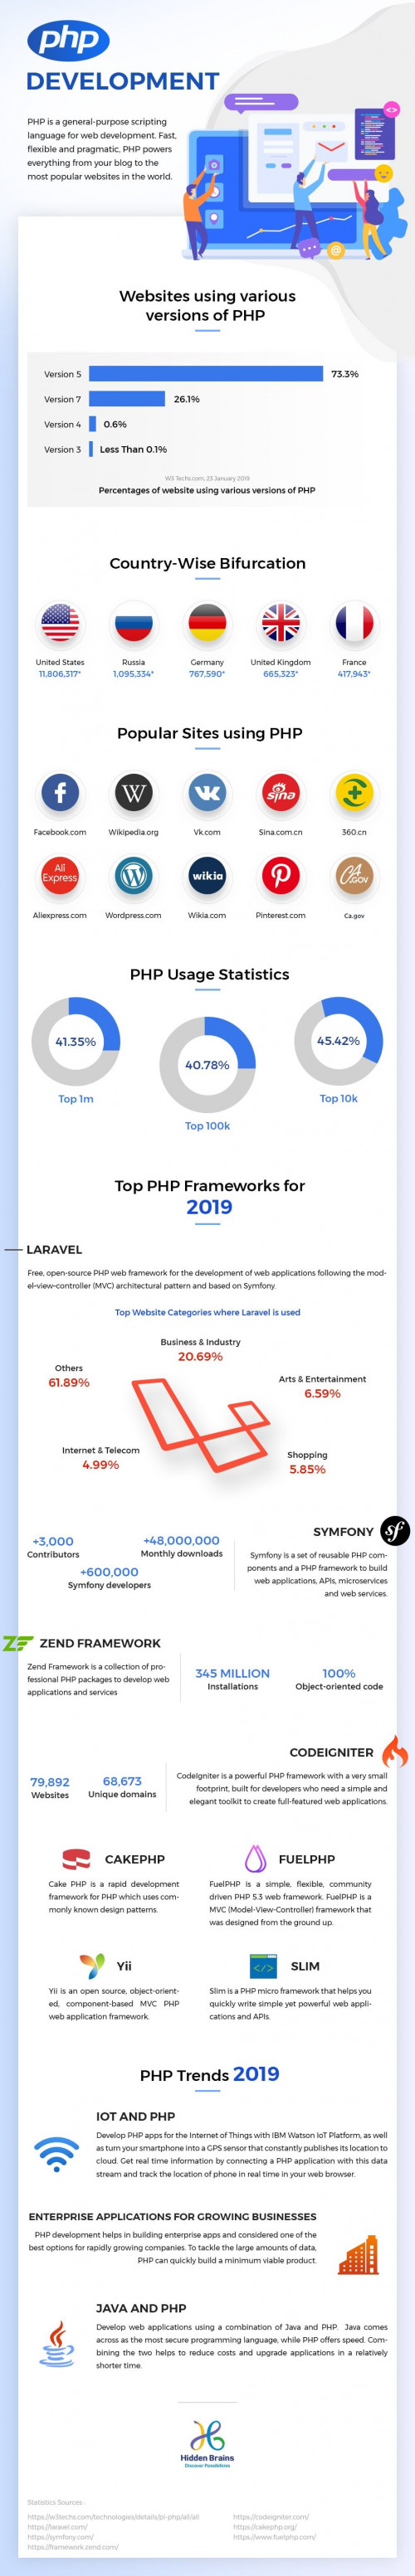 Infographic : PHP Development Trends & Frameworks  https://bit.ly/3kuzwF4